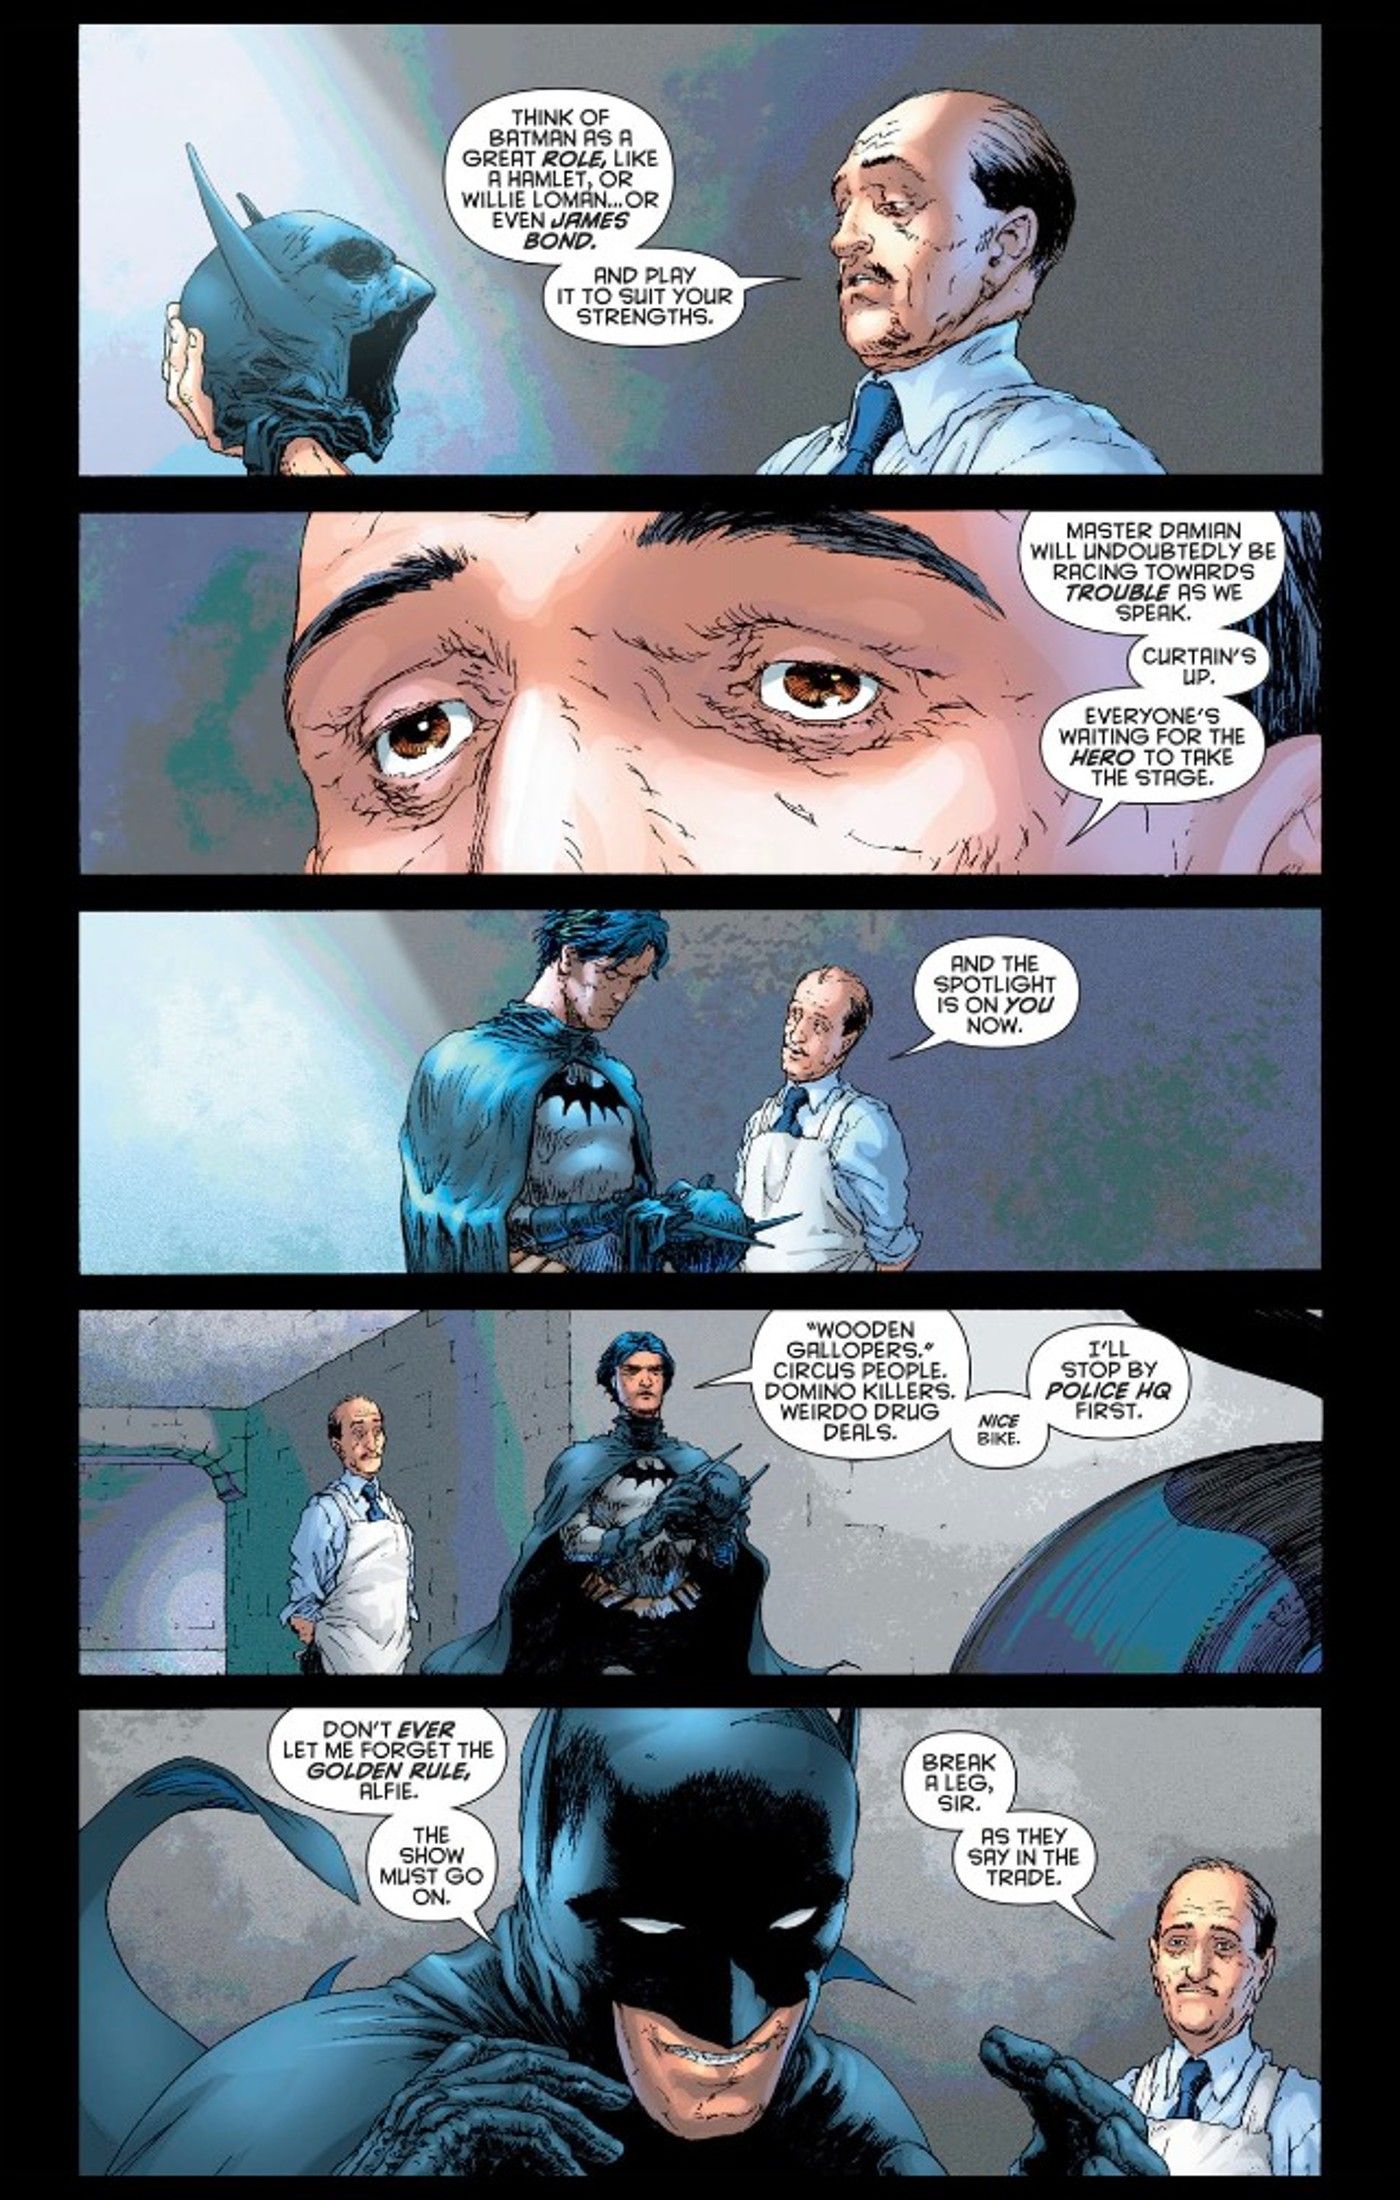 Alfred talks to Dick Grayson as Batman